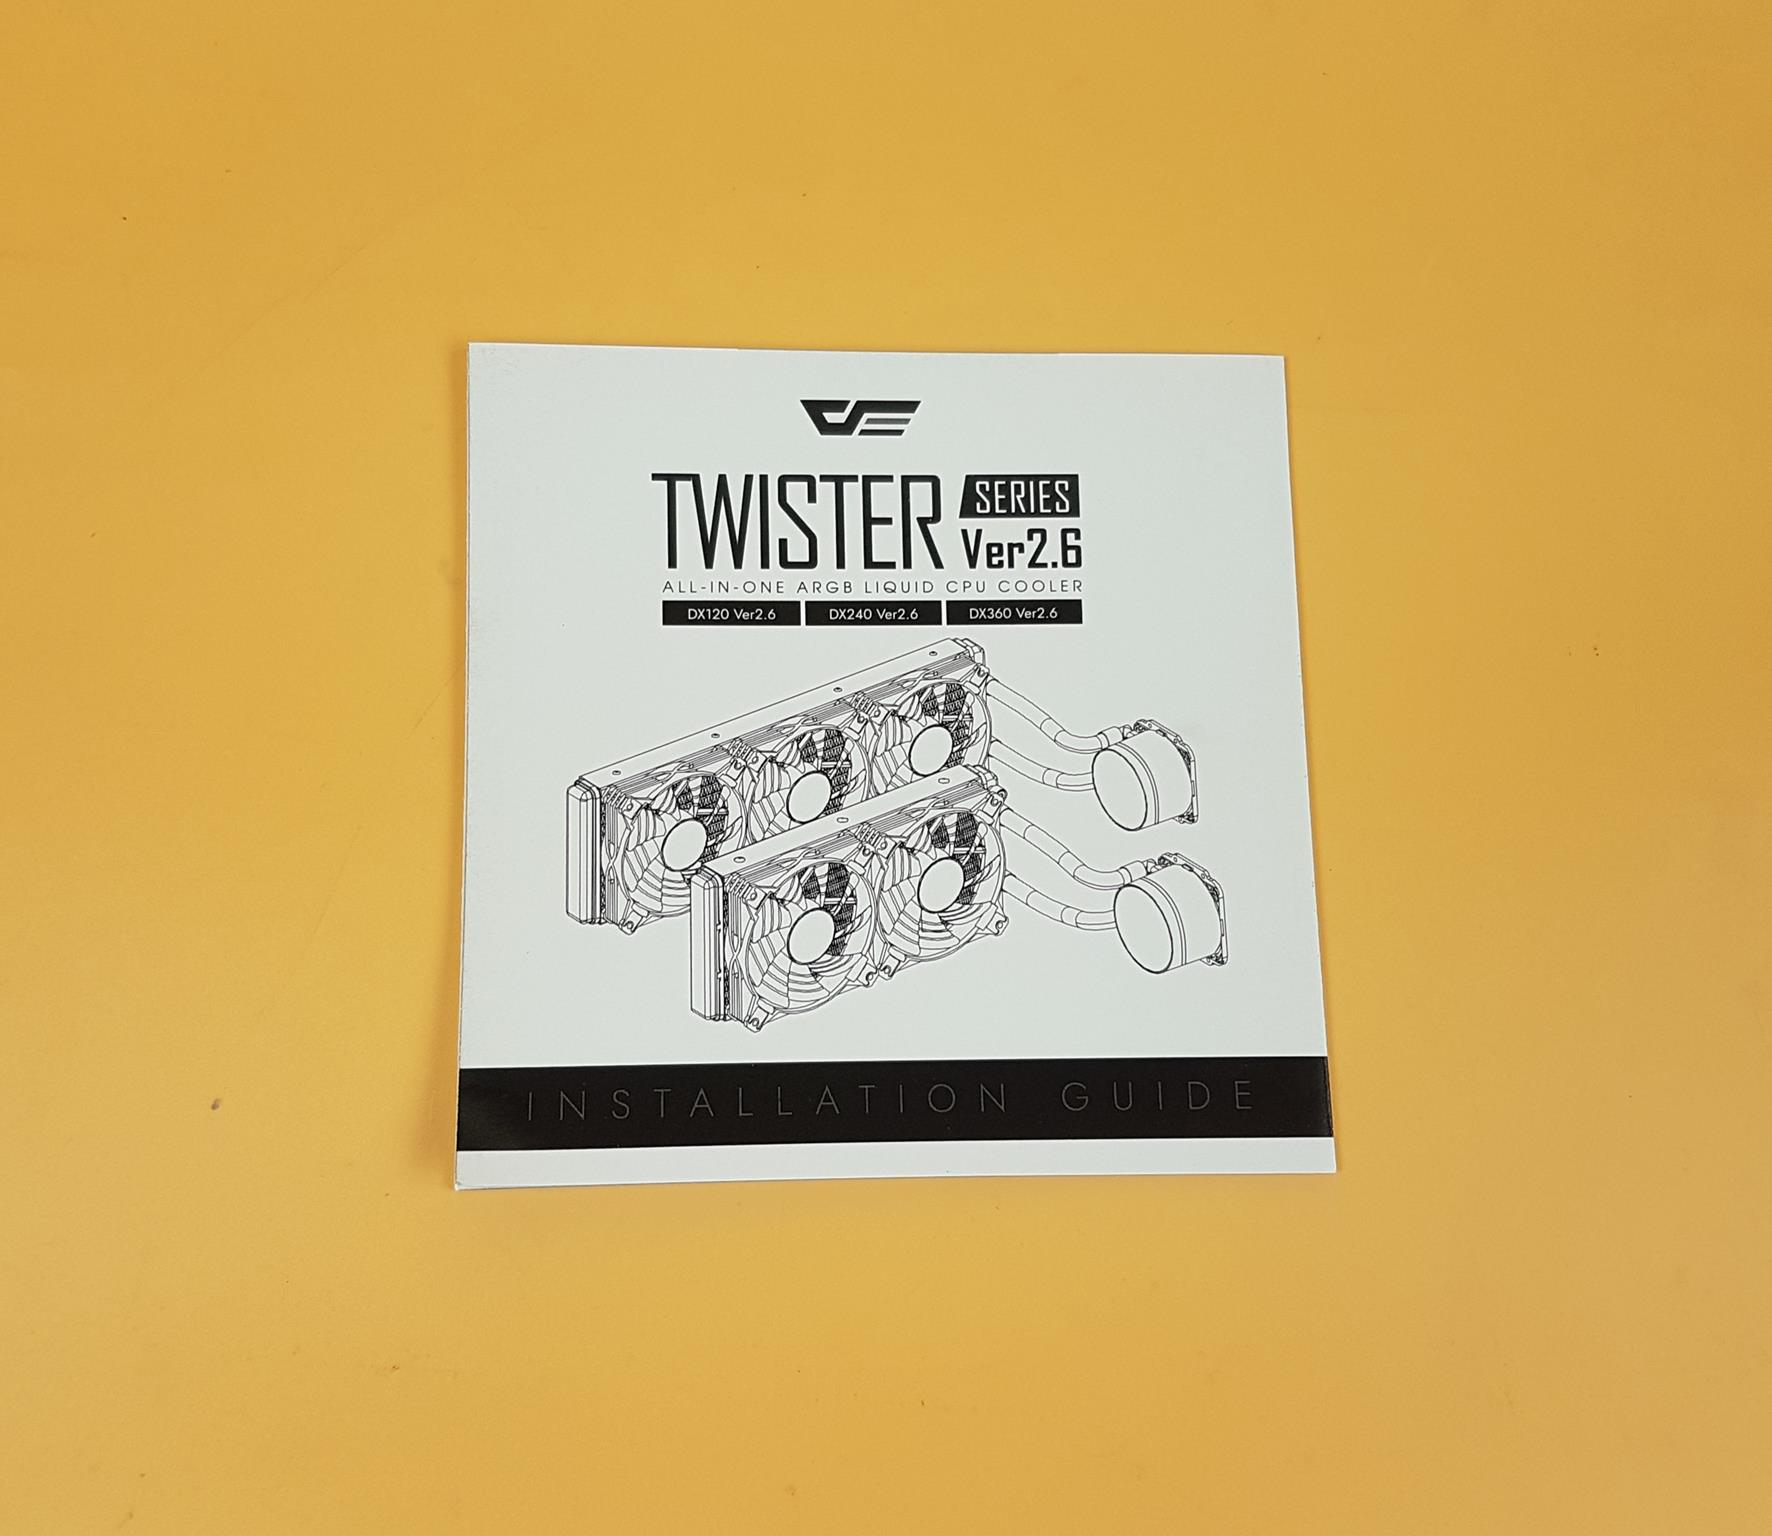 wister DX360 V2.6 installation guide